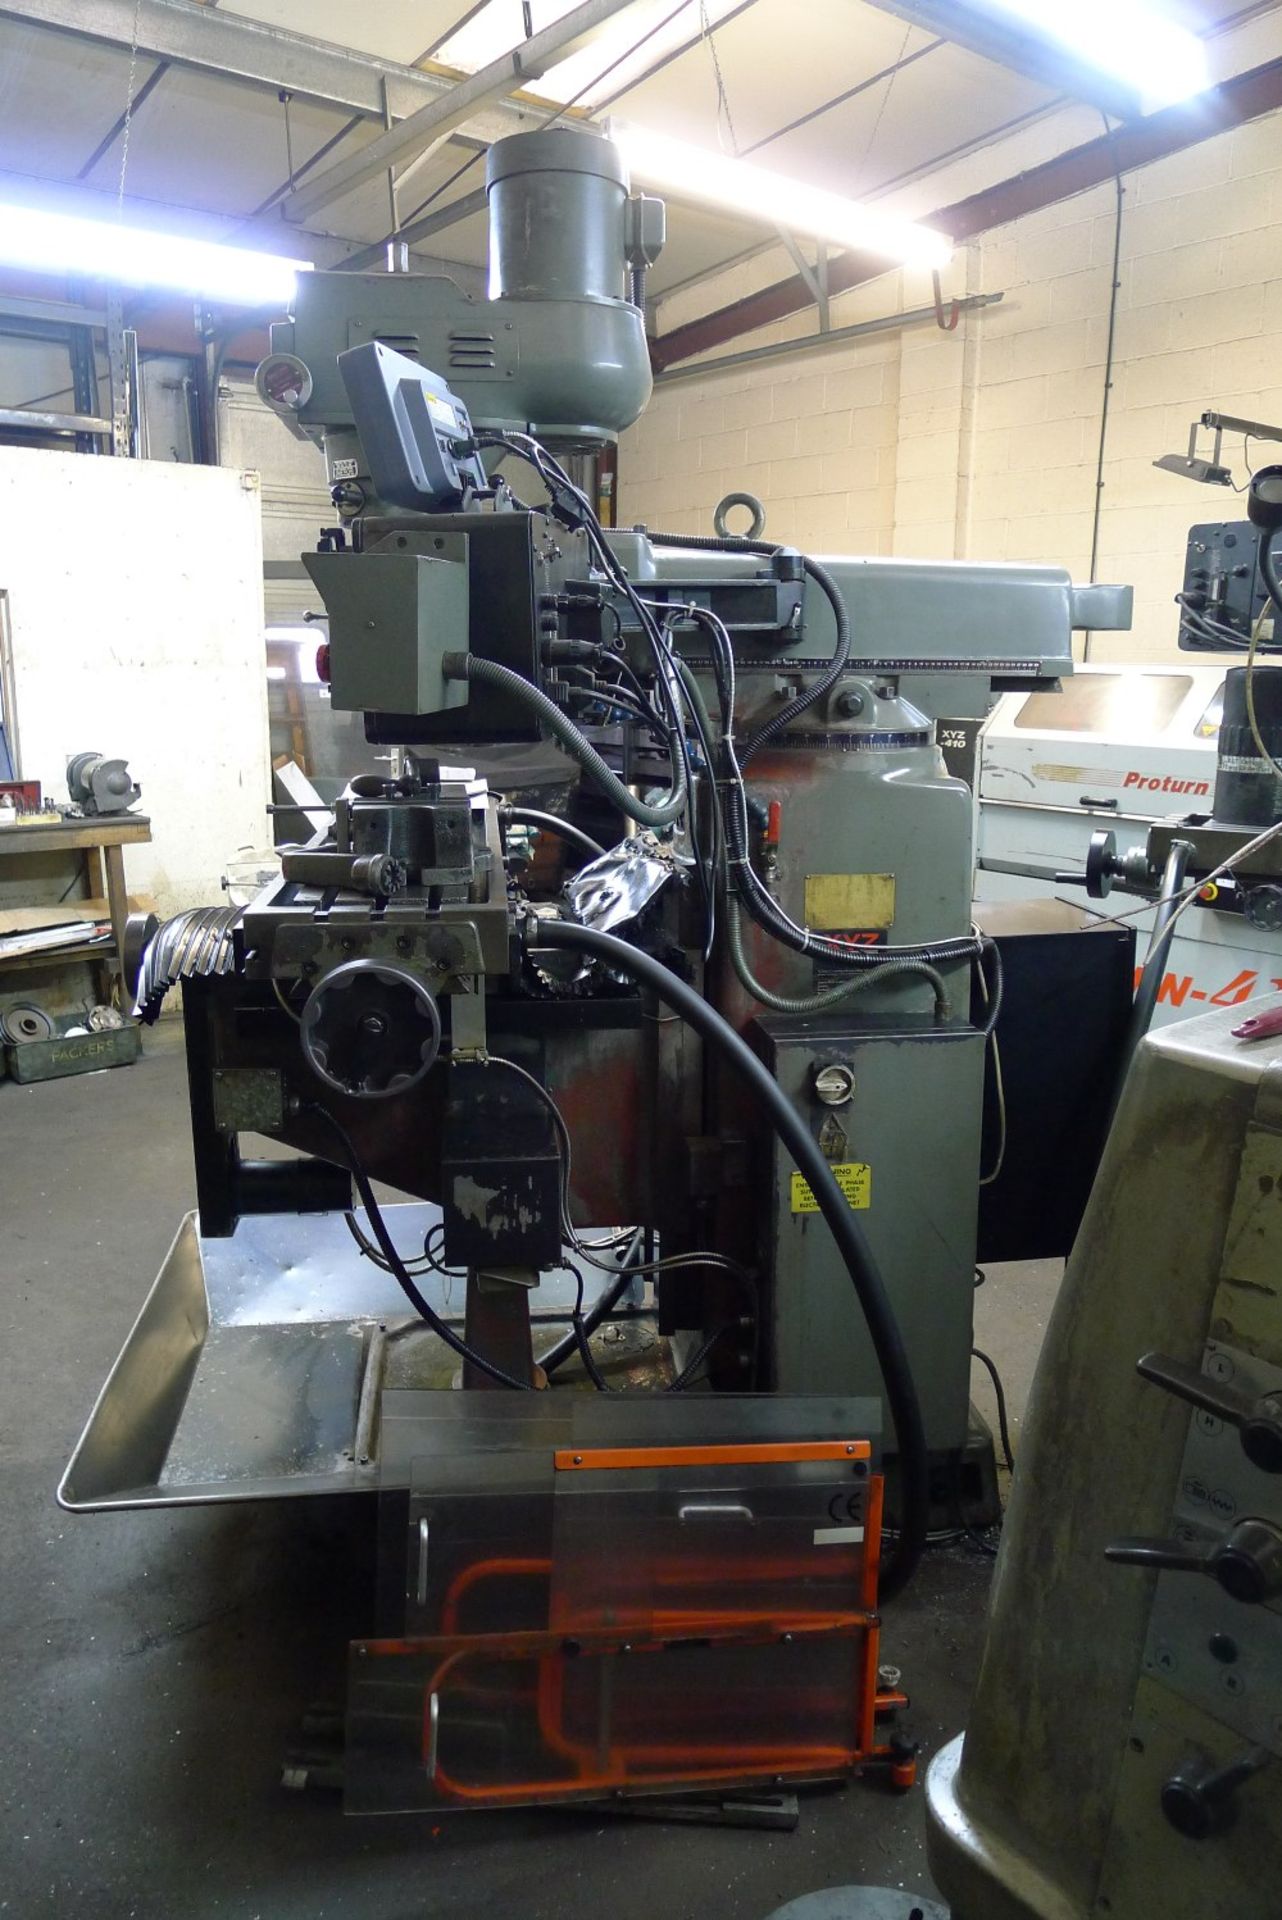 1 milling machine by XYZ model KRV 3000, serial no. 7392, YOM 1995, 3ph, table size 1.37cm x 30cm, - Image 2 of 11